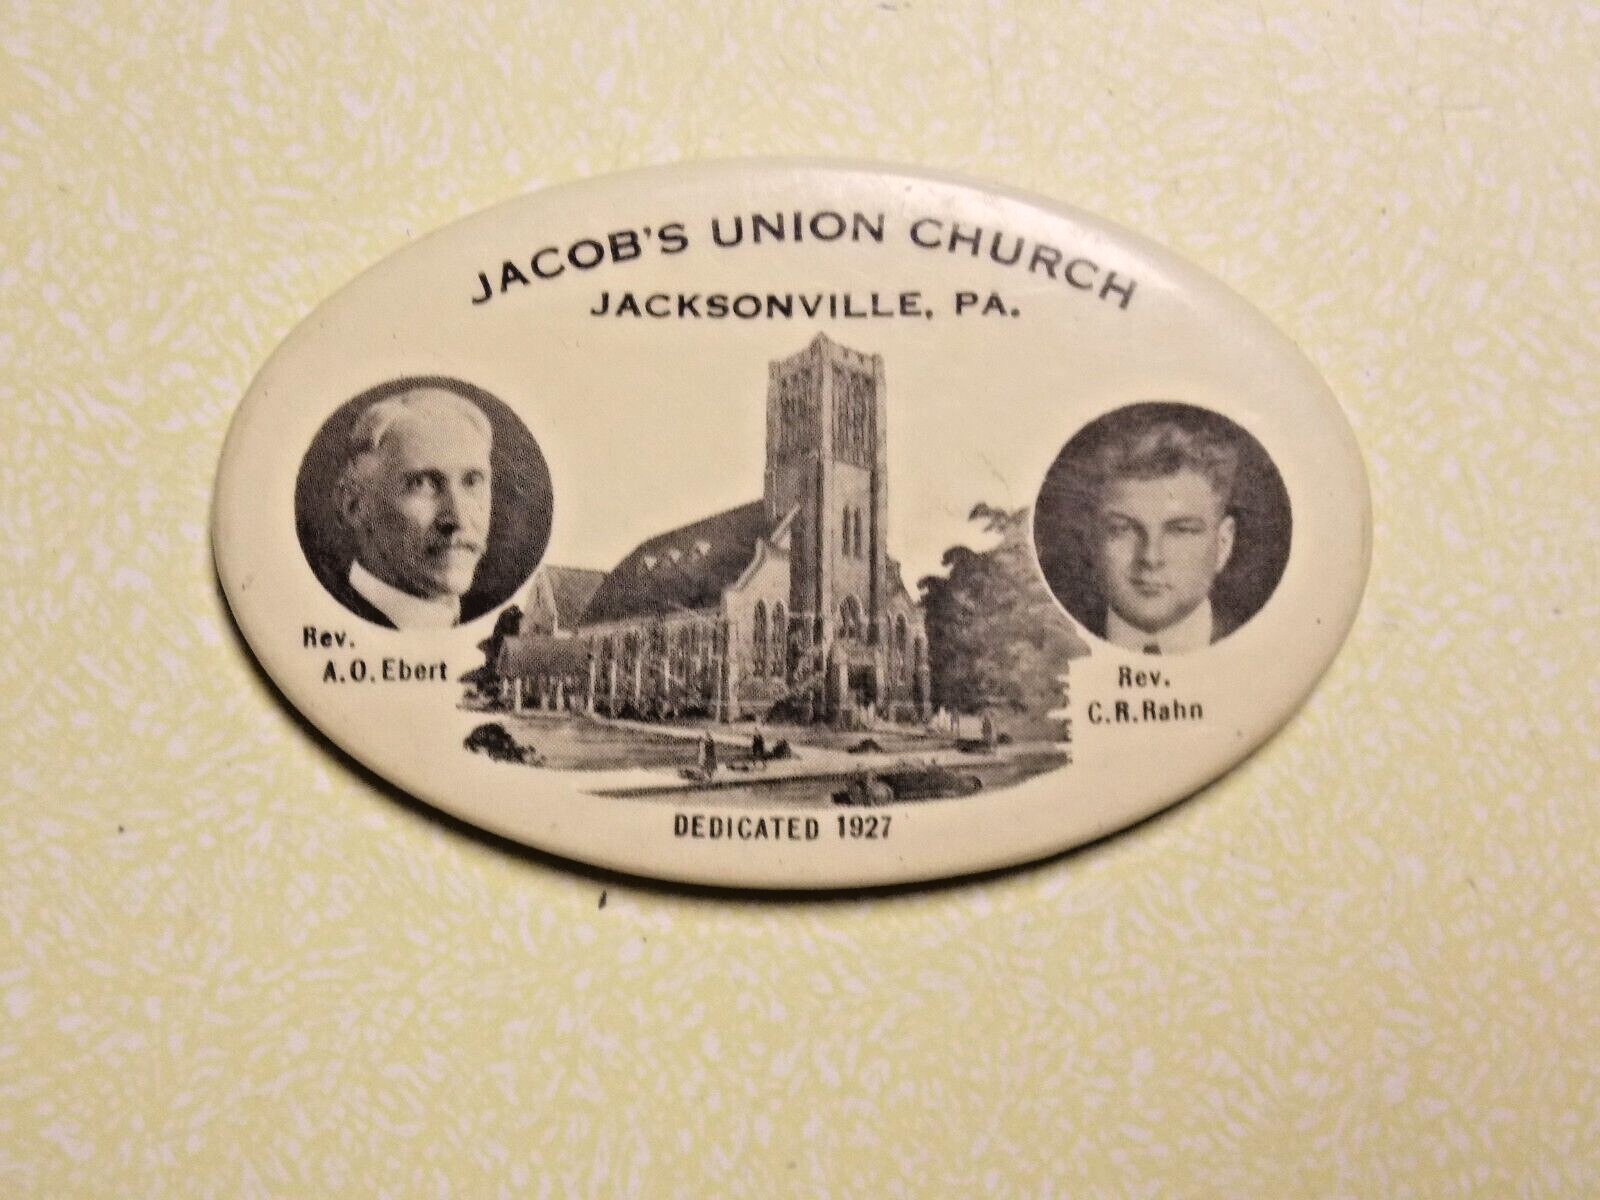 Celluloid  Pocket Mirror 1927 Dedication Jacob\'s Union Church Jacksonville, Pa.